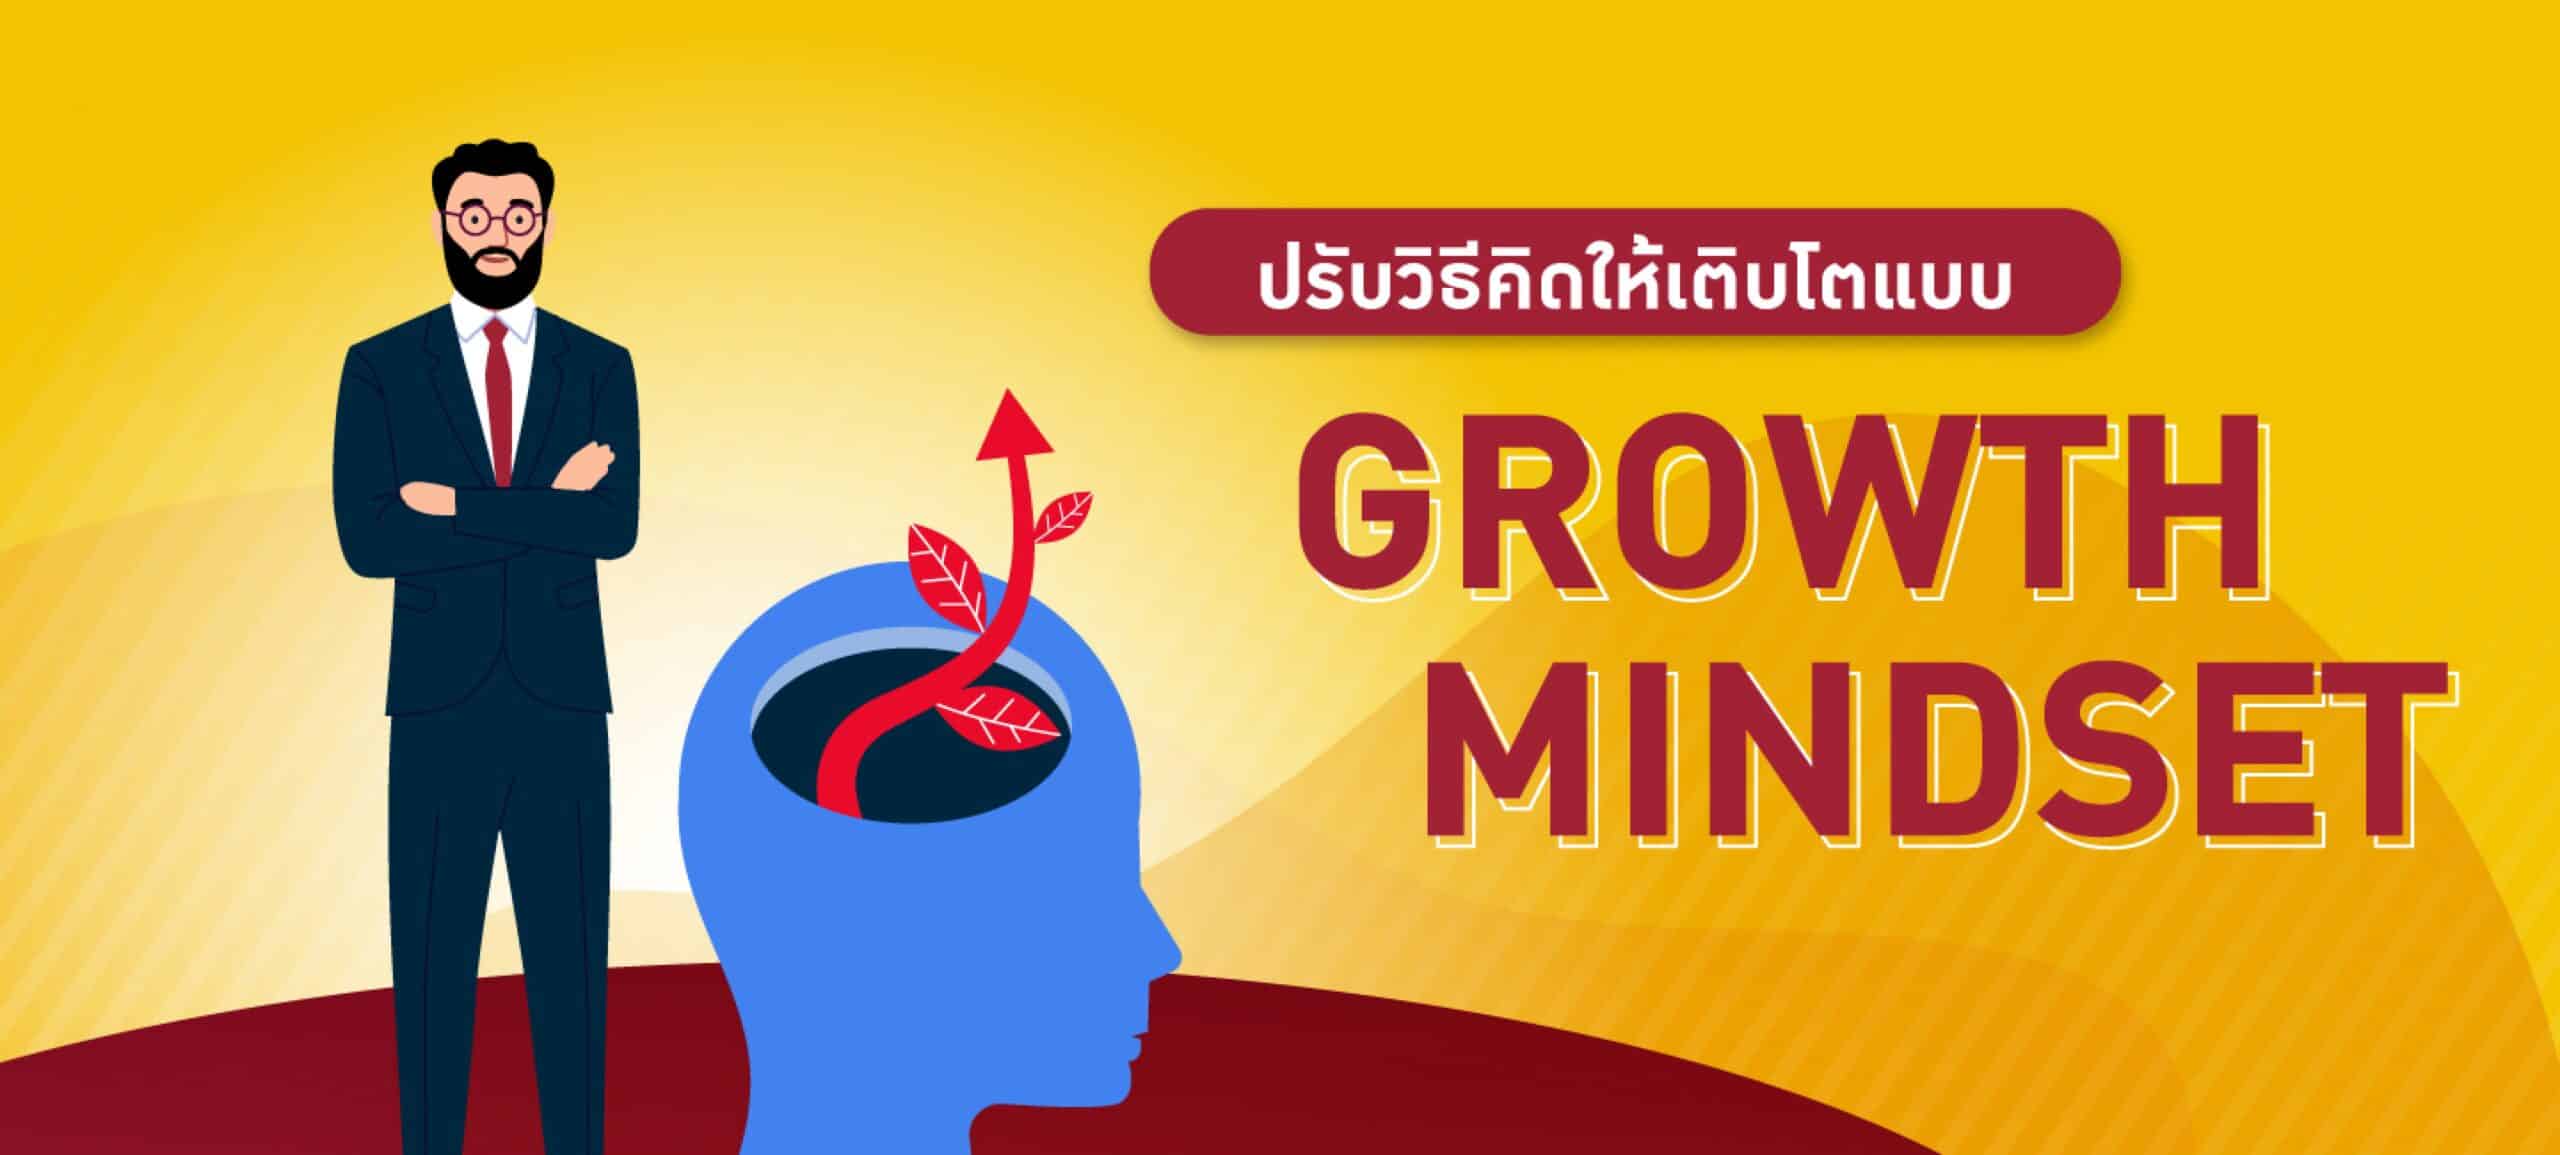 growth-mindset_rjB4x